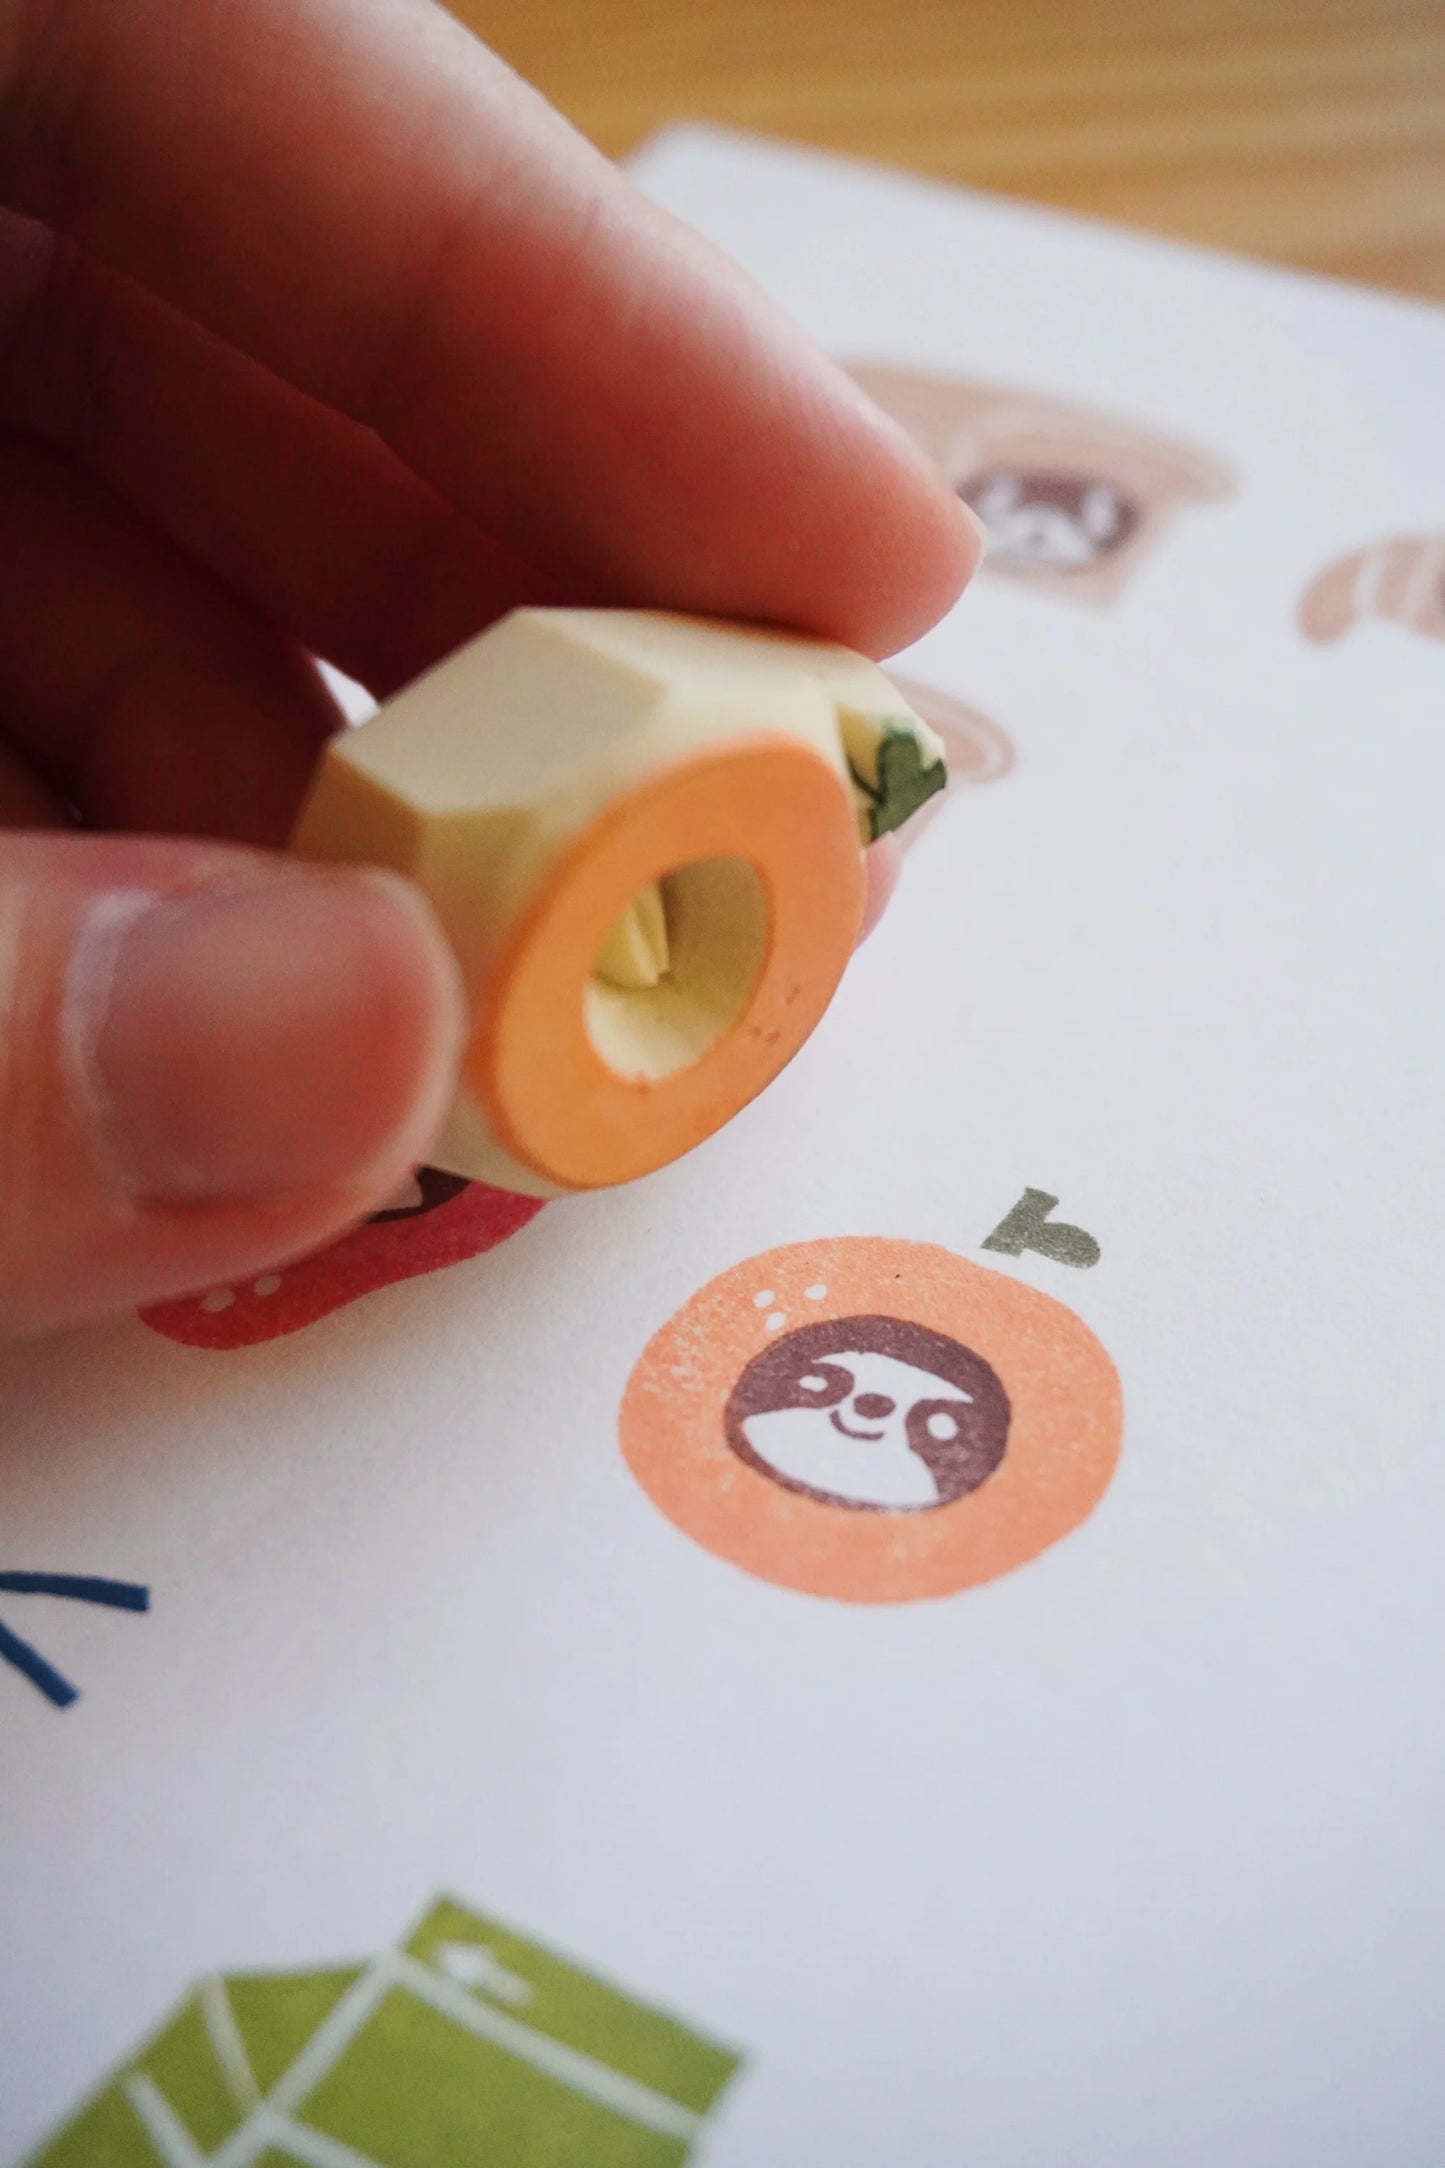 Fruity Sloth Stamp Set